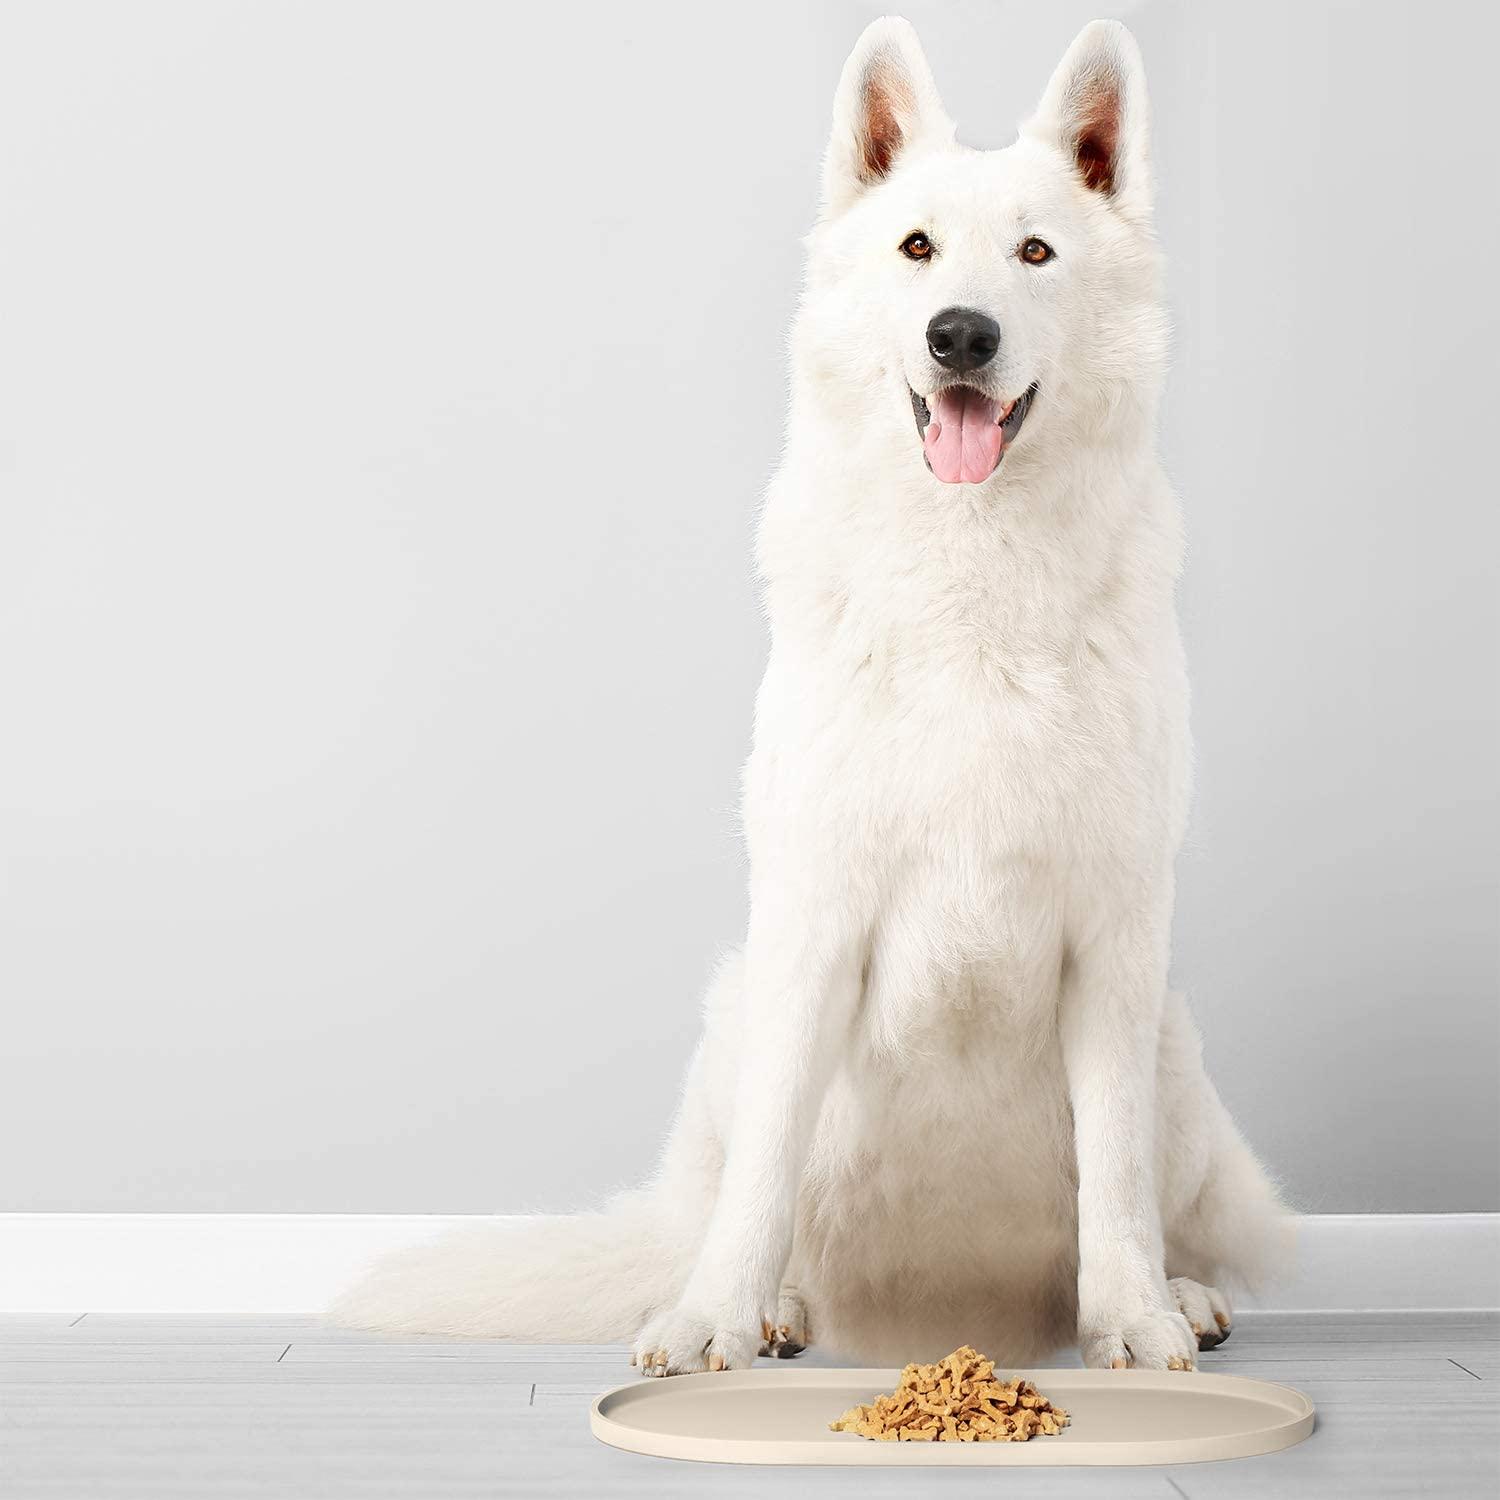 DogBuddy dogbuddy dog food mat - waterproof dog mat for food and